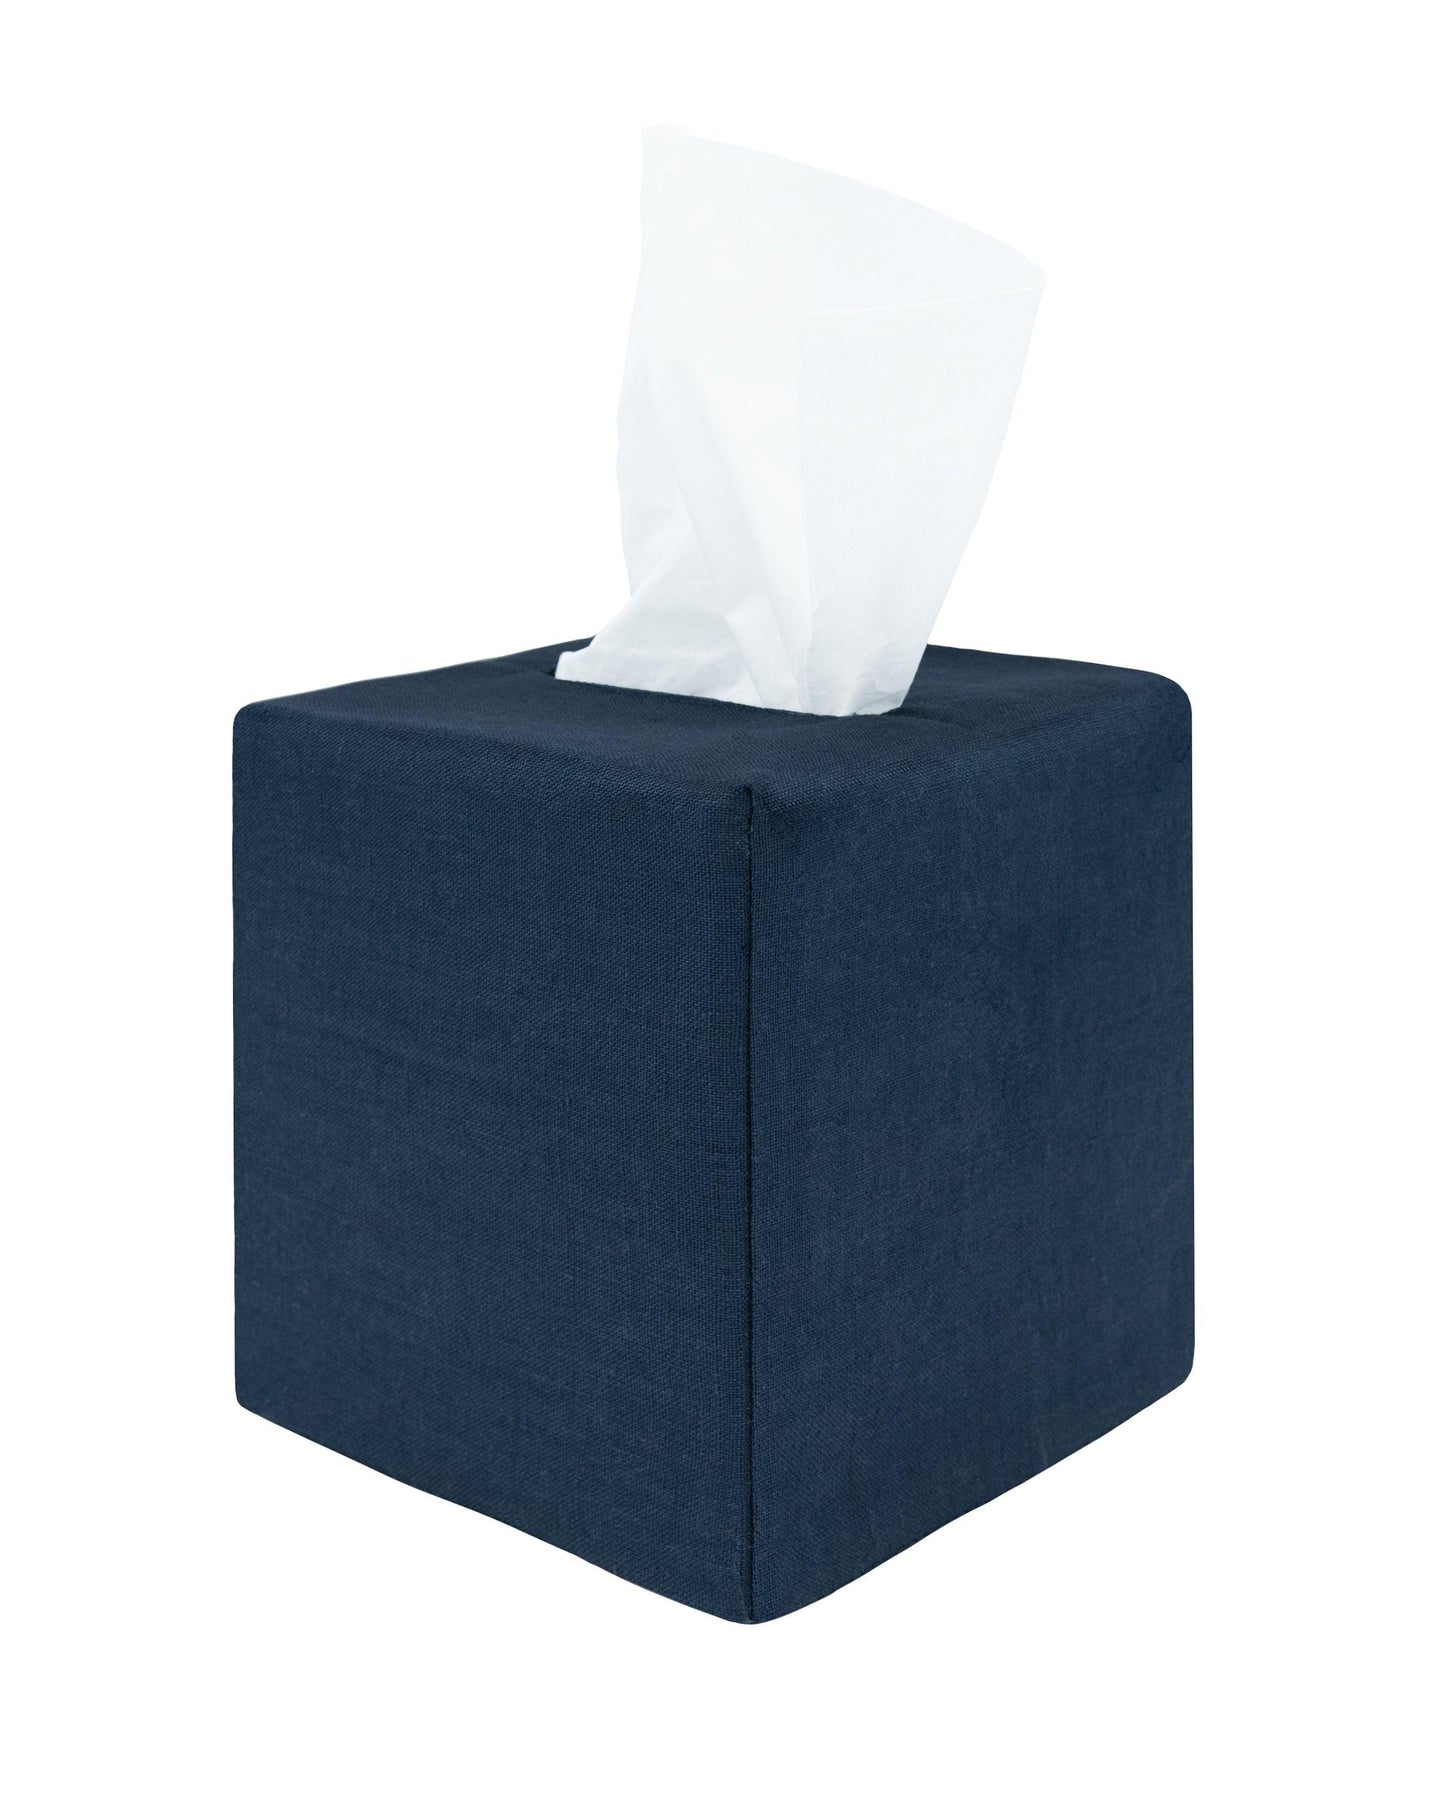 PILLOWPIA james tissue box cover indigo